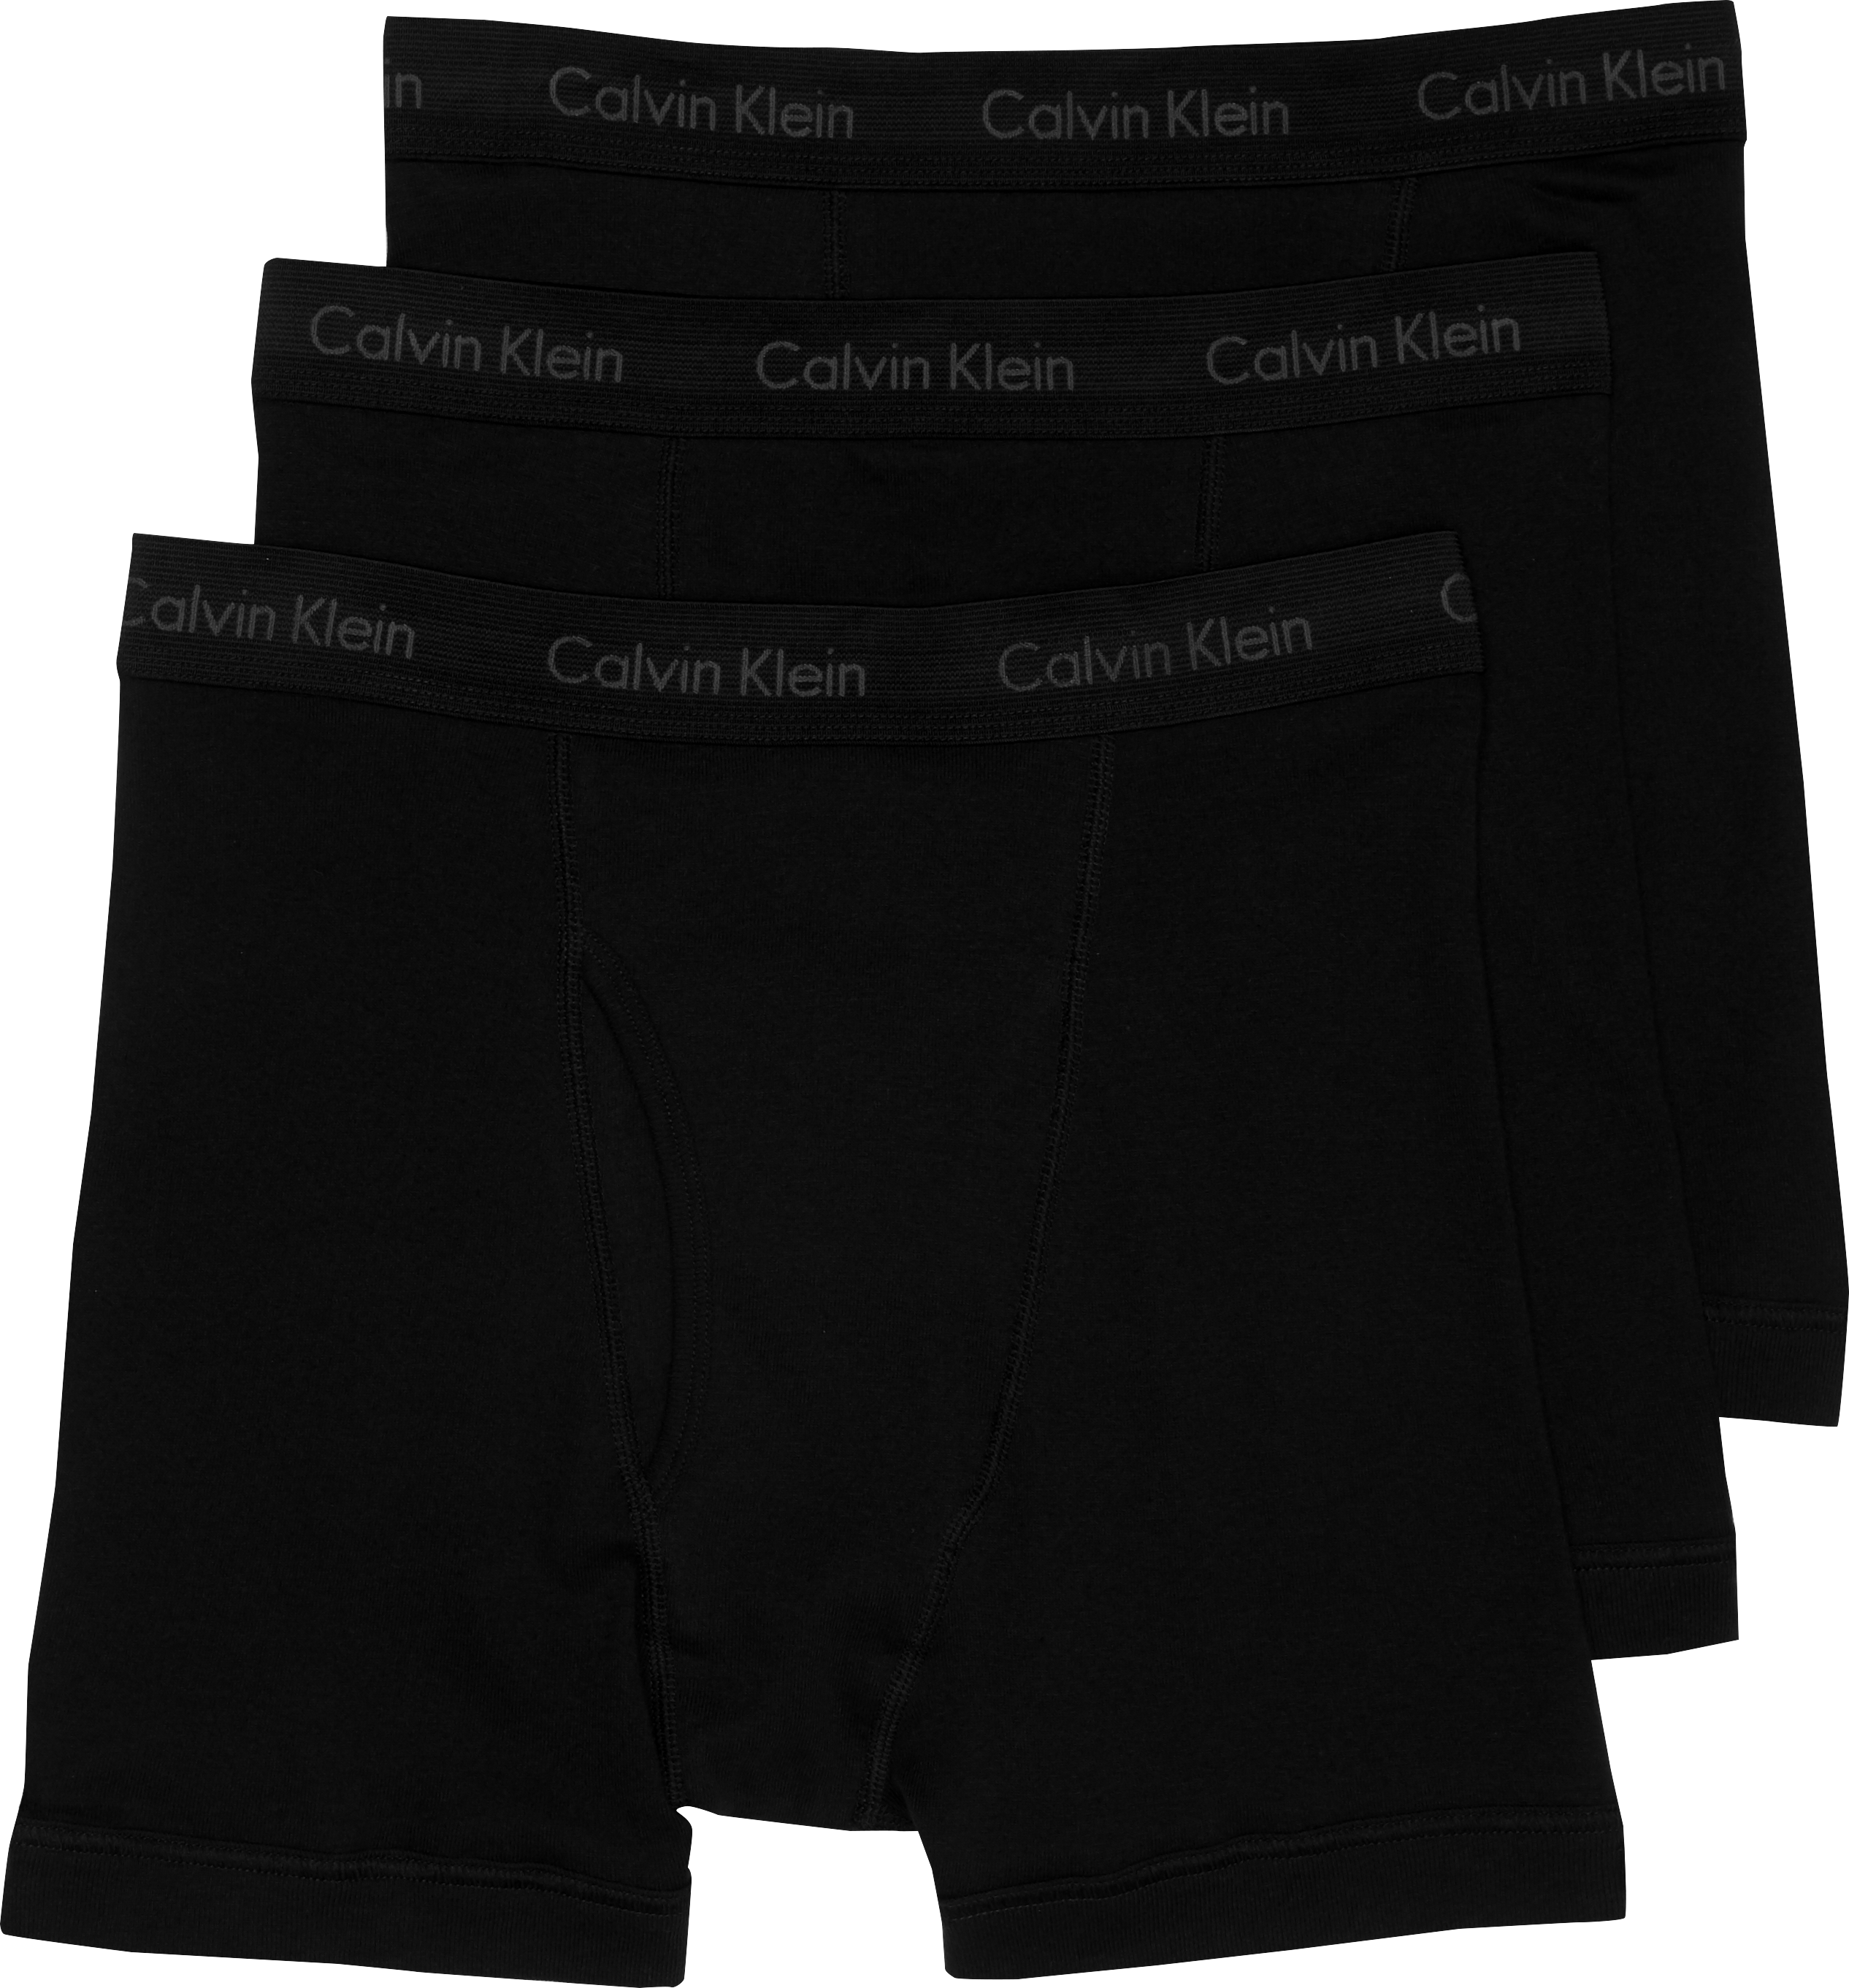 calvin klein trunk boxers